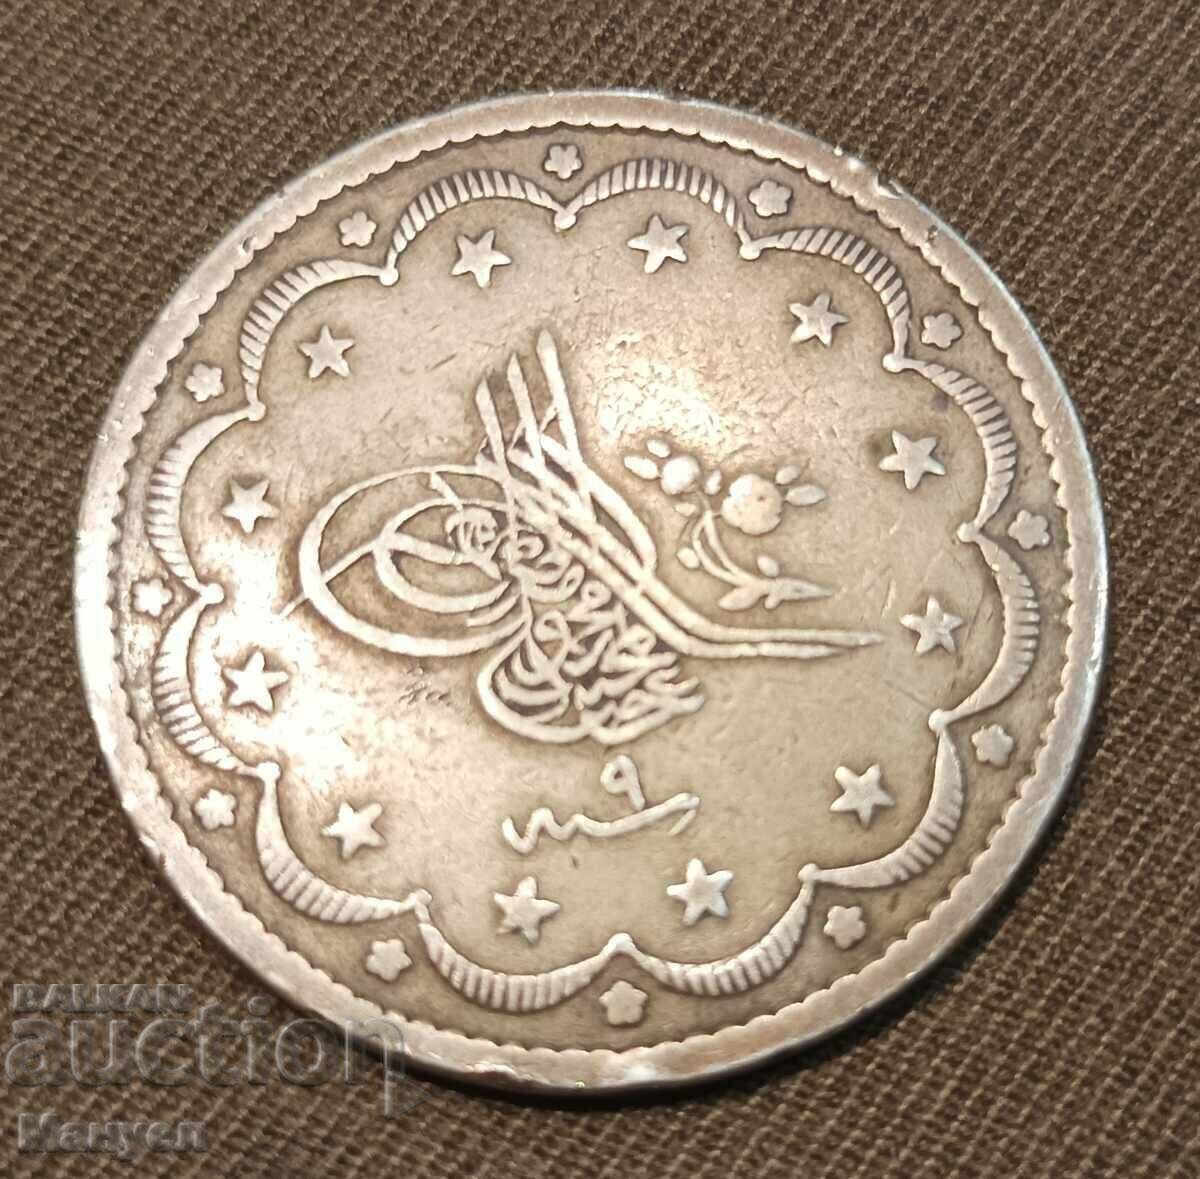 20 kurusha, silver, Sultan Abdul Mejid.